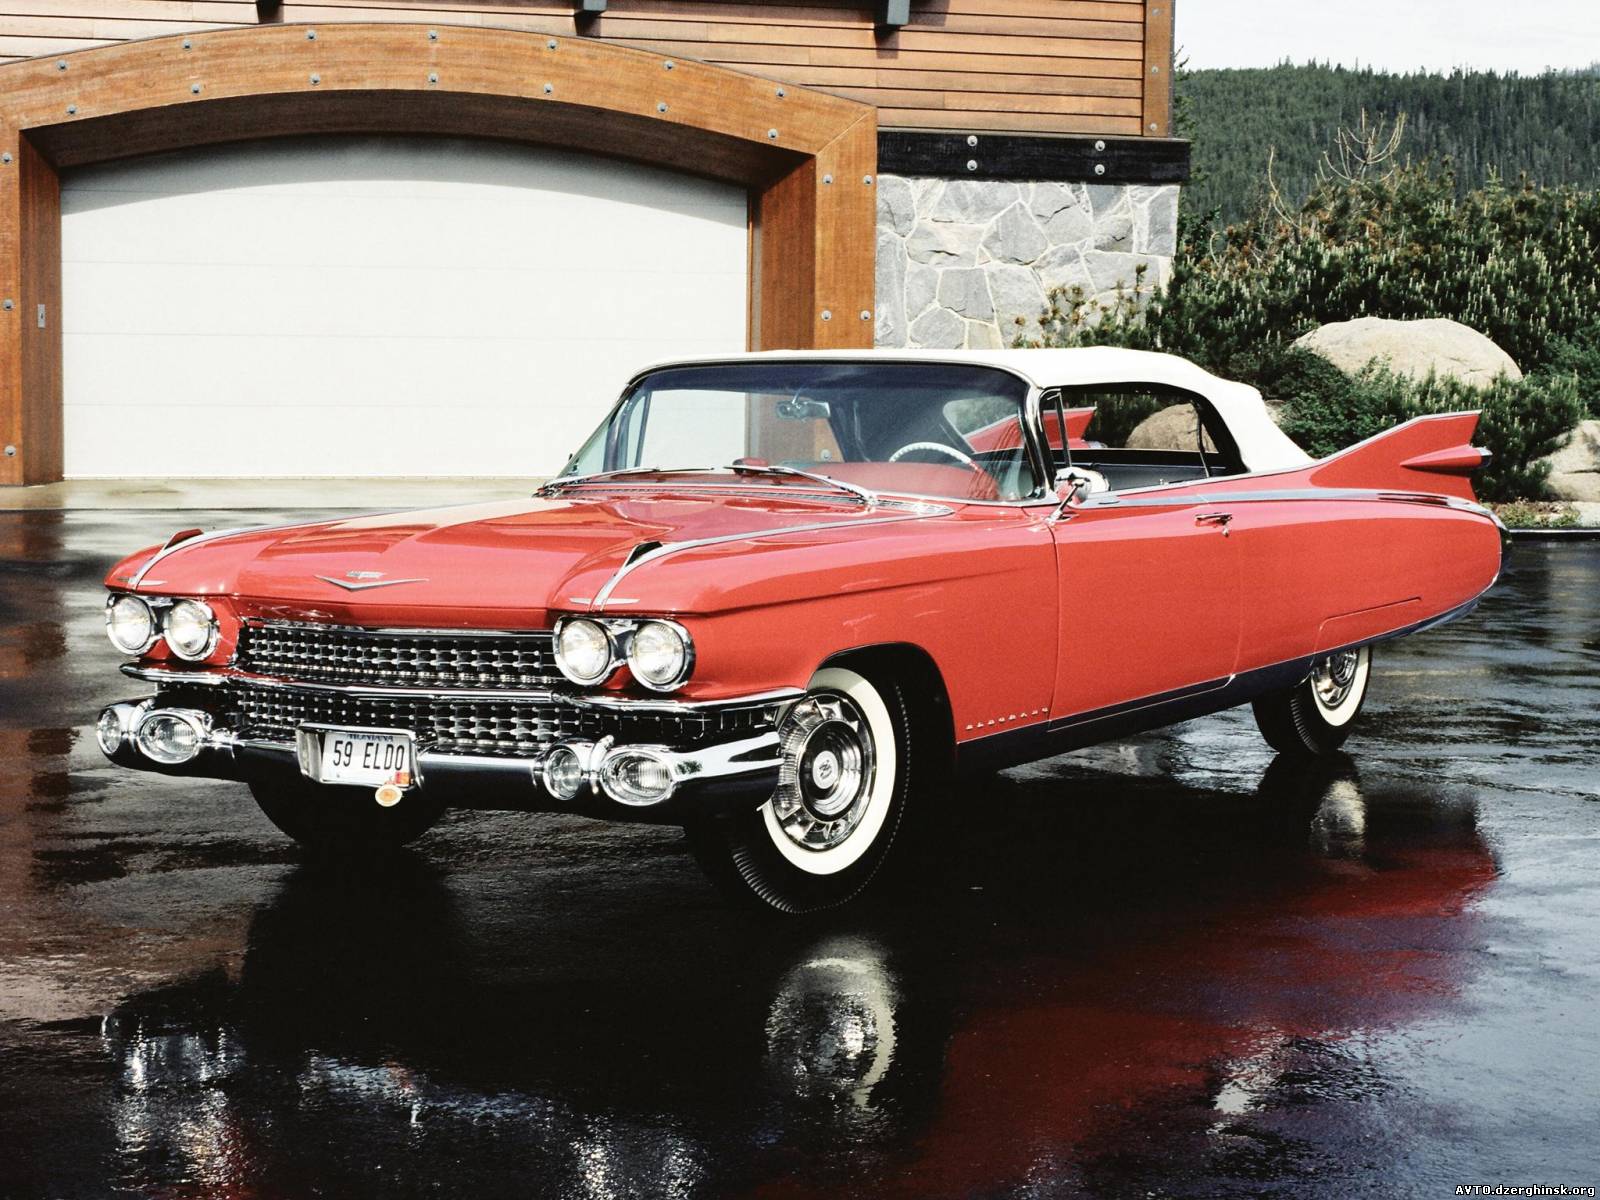 049. Cadillac  Eldorado Biarritz 1959